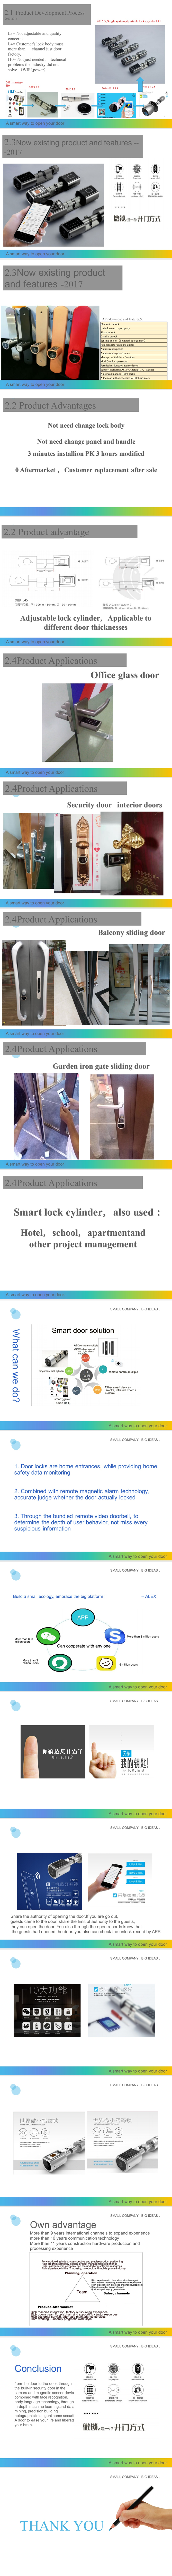 Smart Lock Introduction